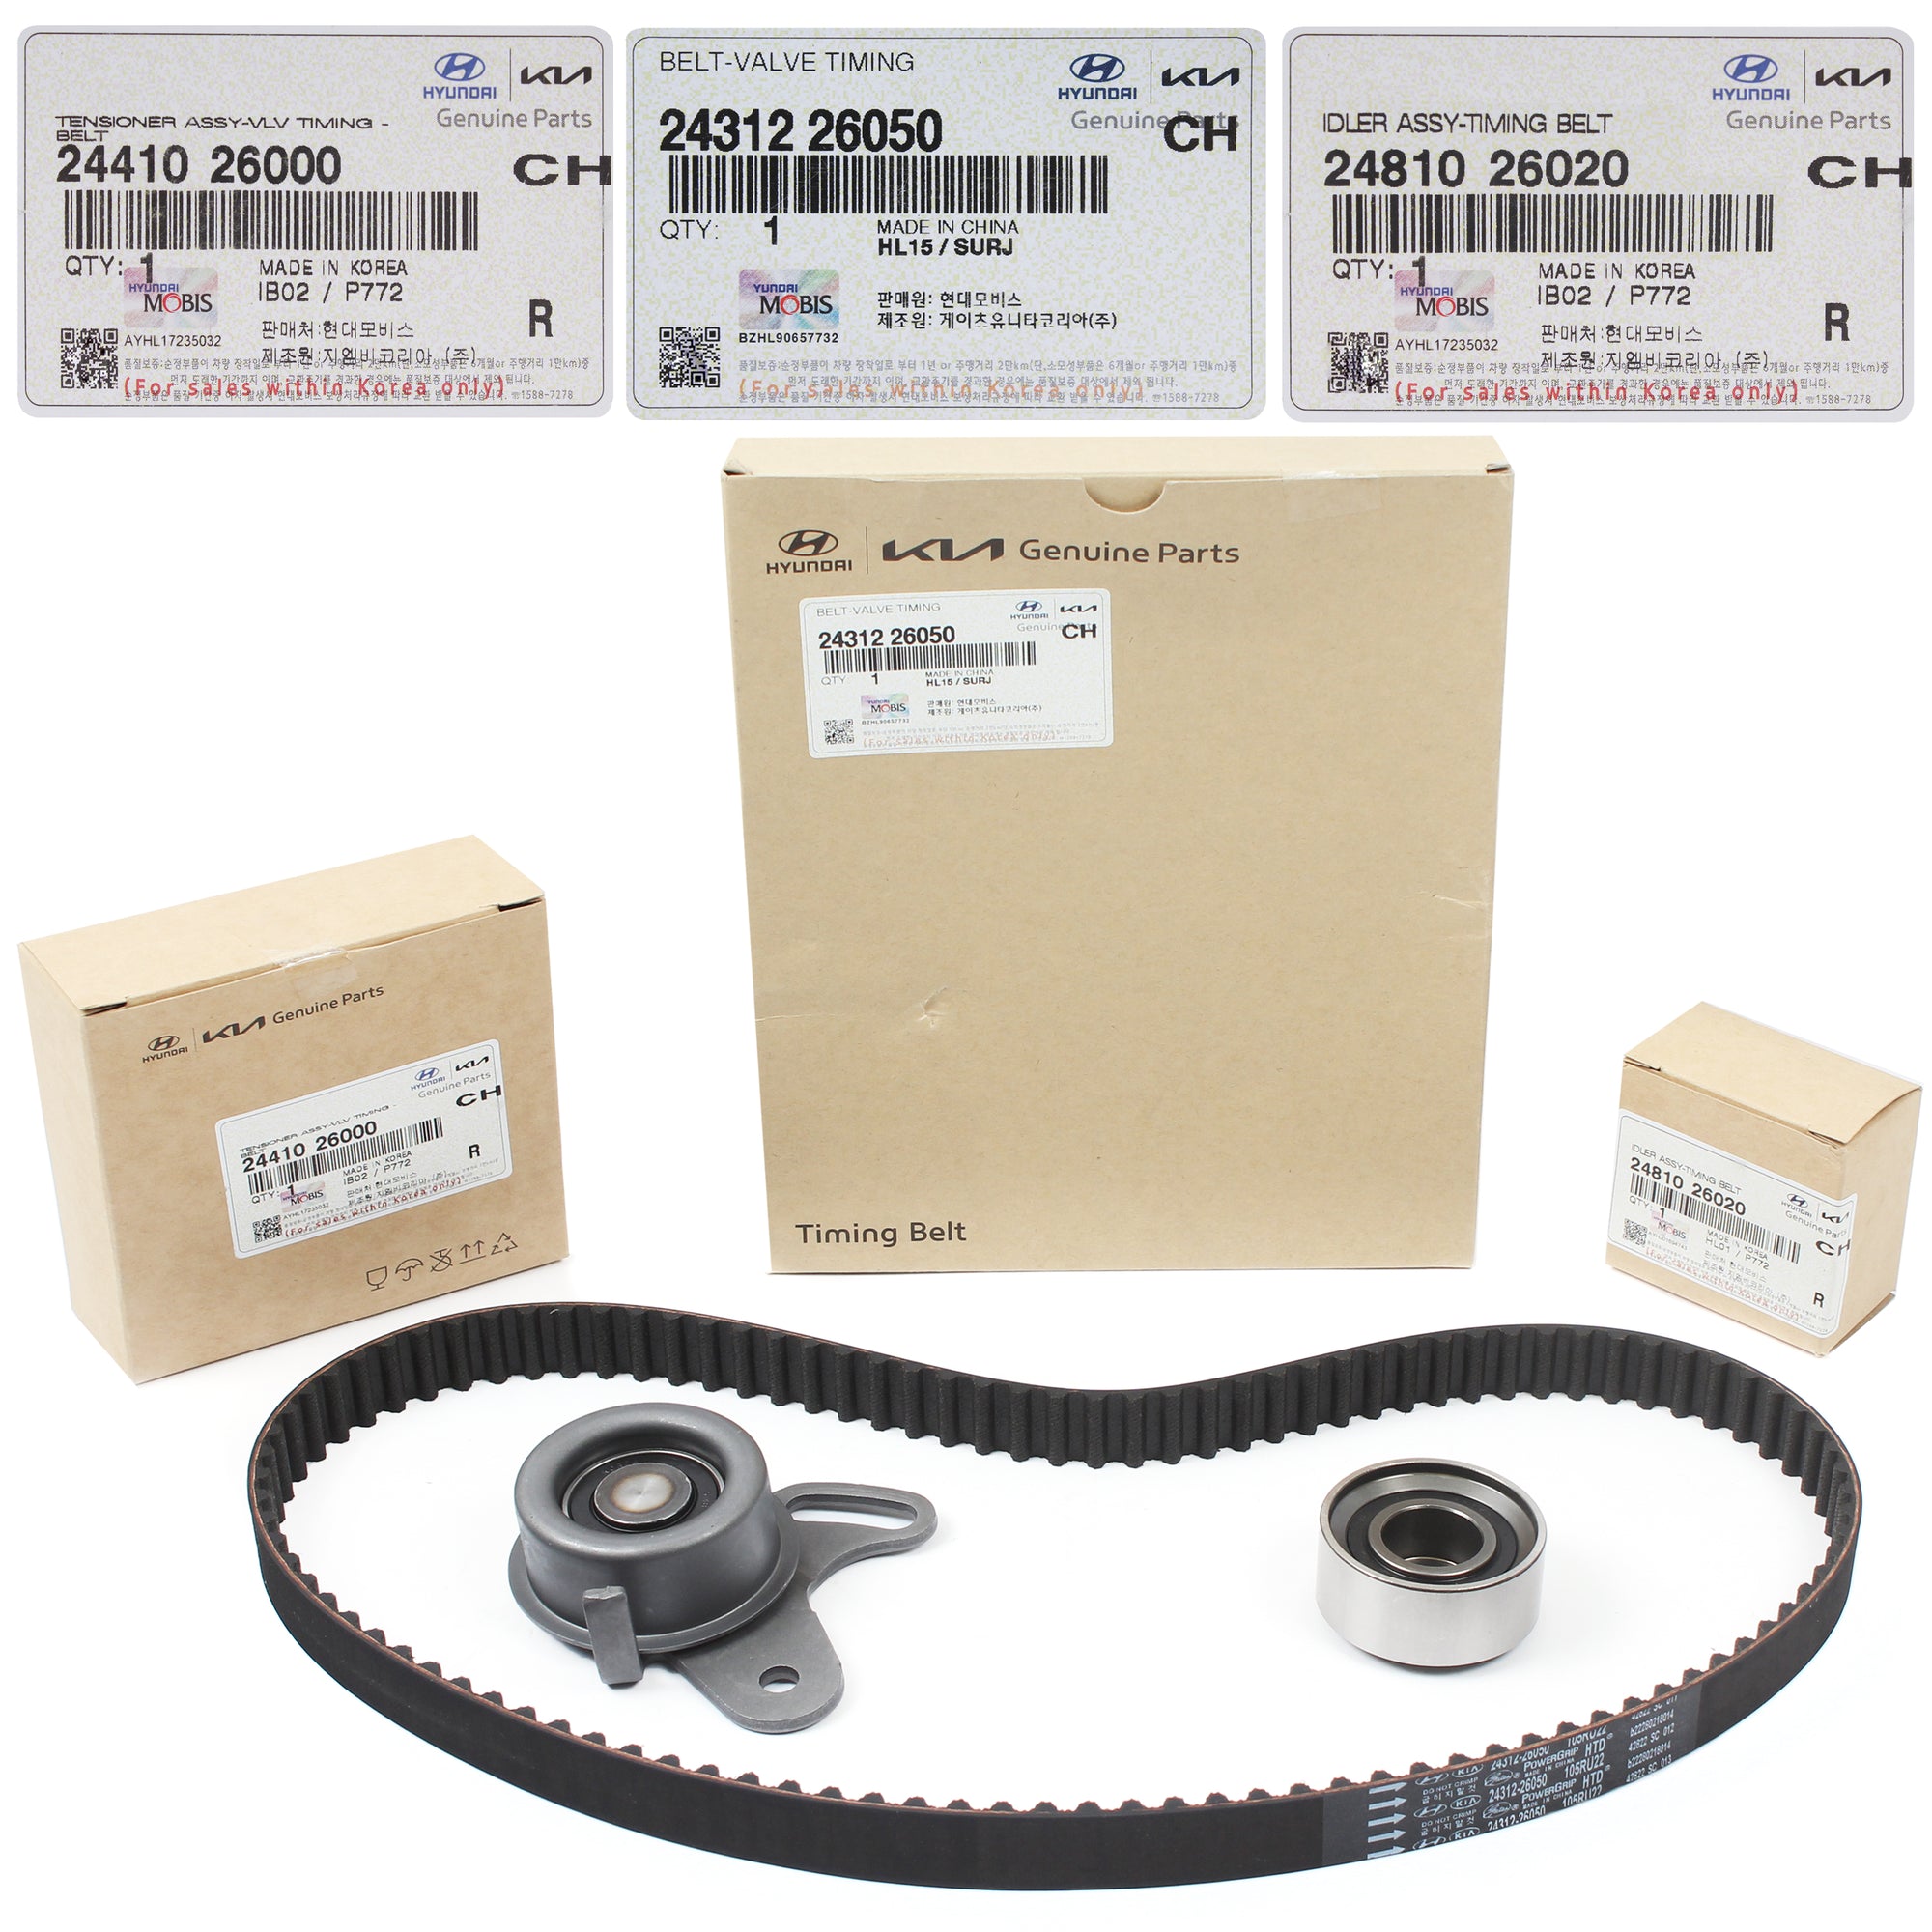 GENUINE Engine Timing Belt Kit for 1996-2011 Hyundai Accent Kia Rio 2431226050